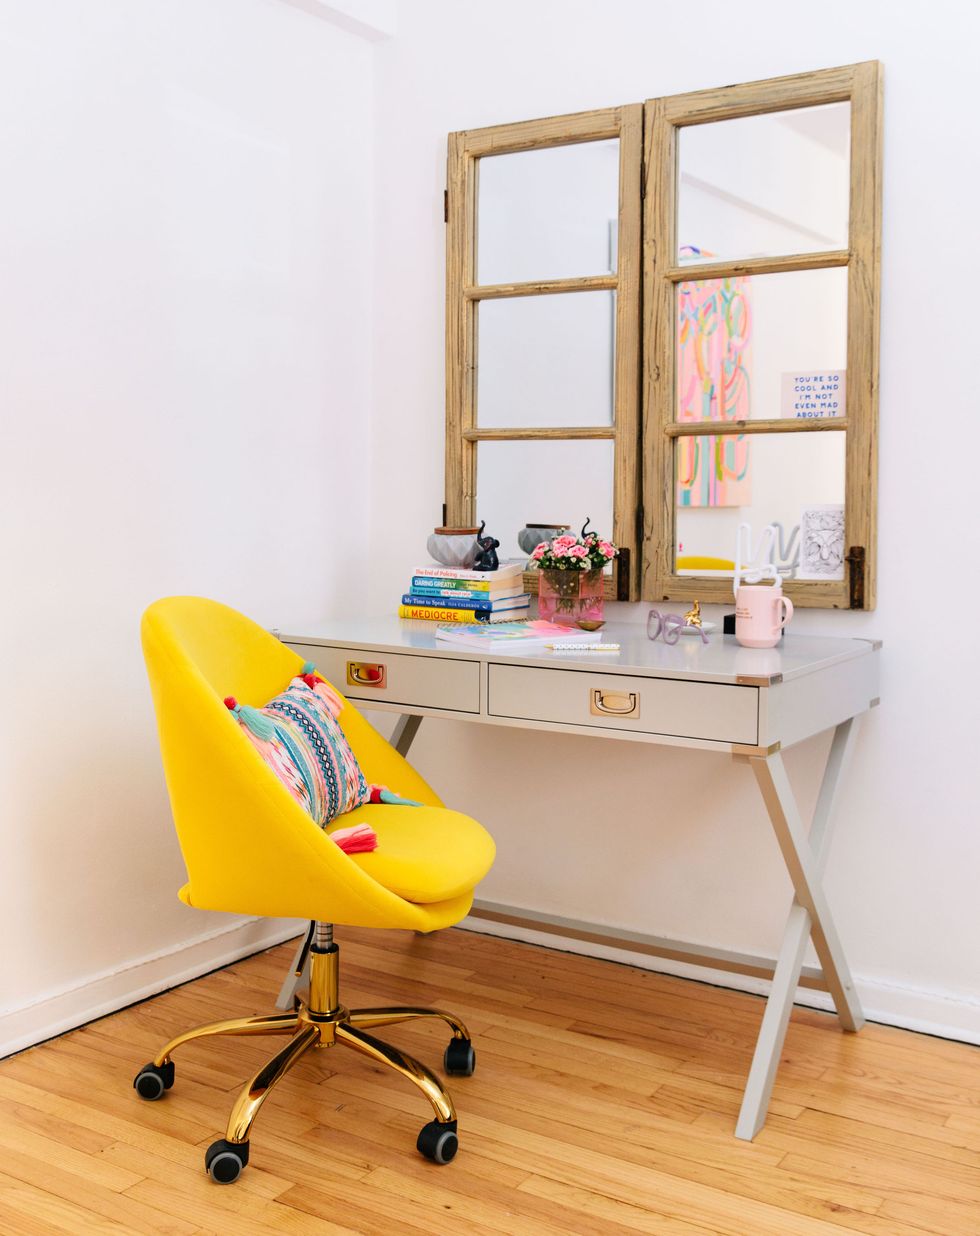 yellow chair, desk